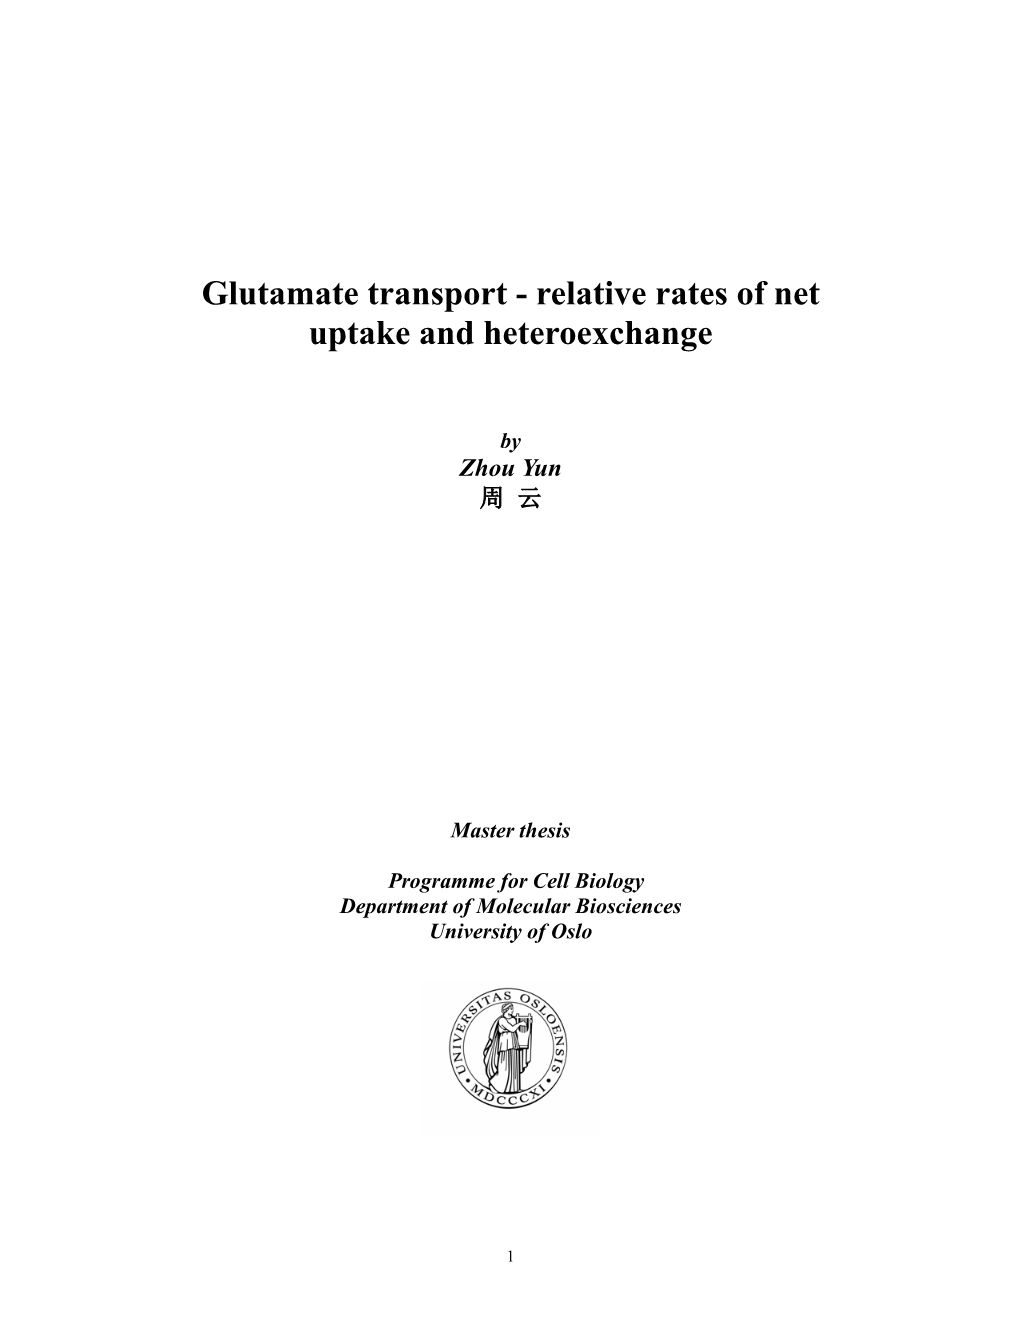 Glutamate Transport - Relative Rates of Net Uptake and Heteroexchange